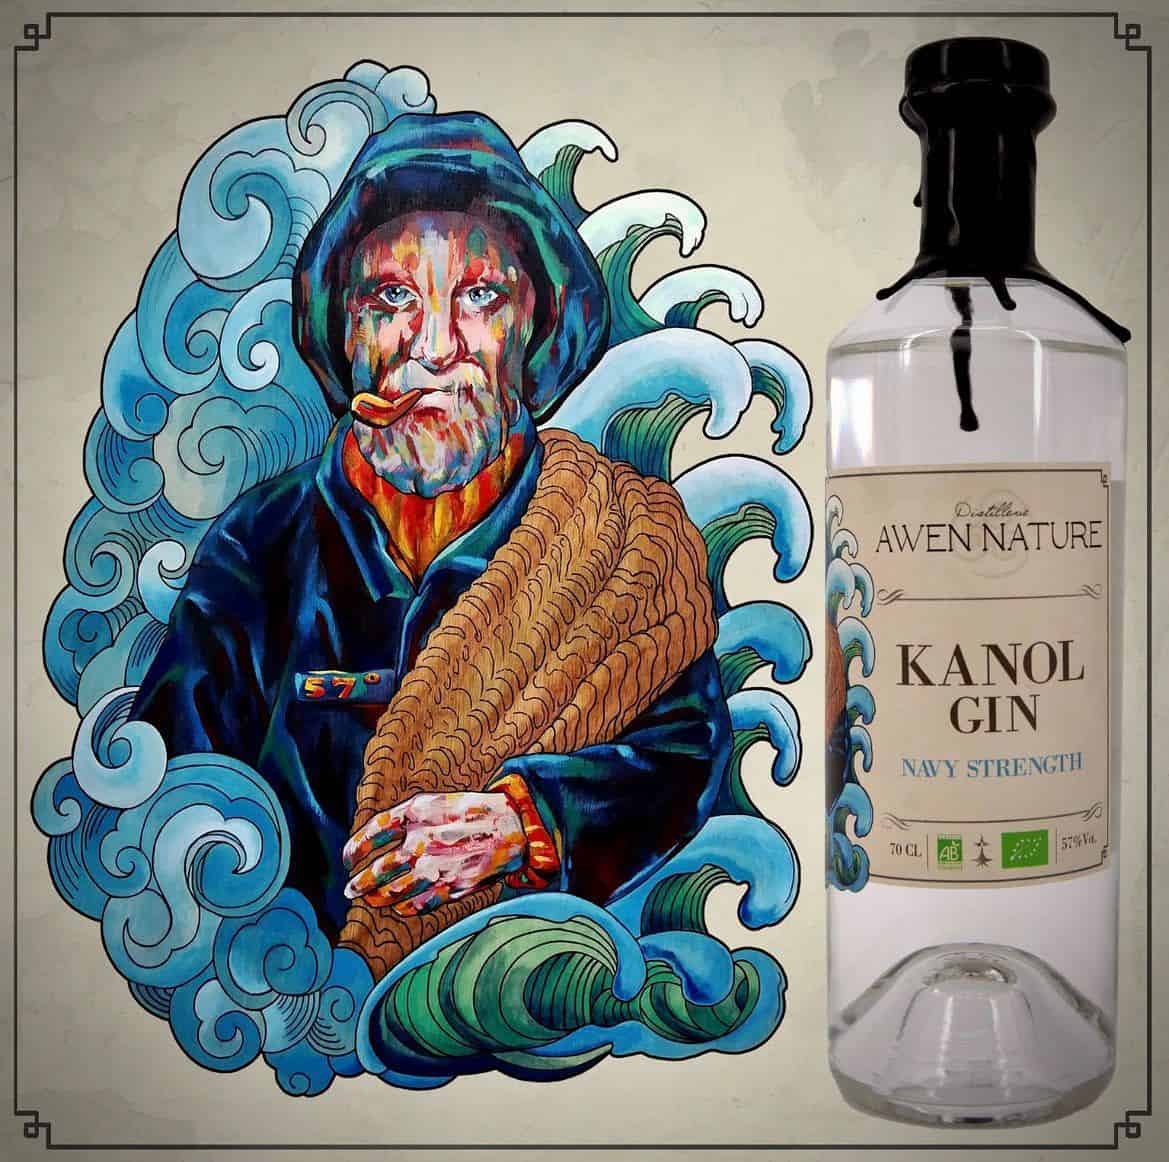 Awen Nature lance son premier gin navy strength